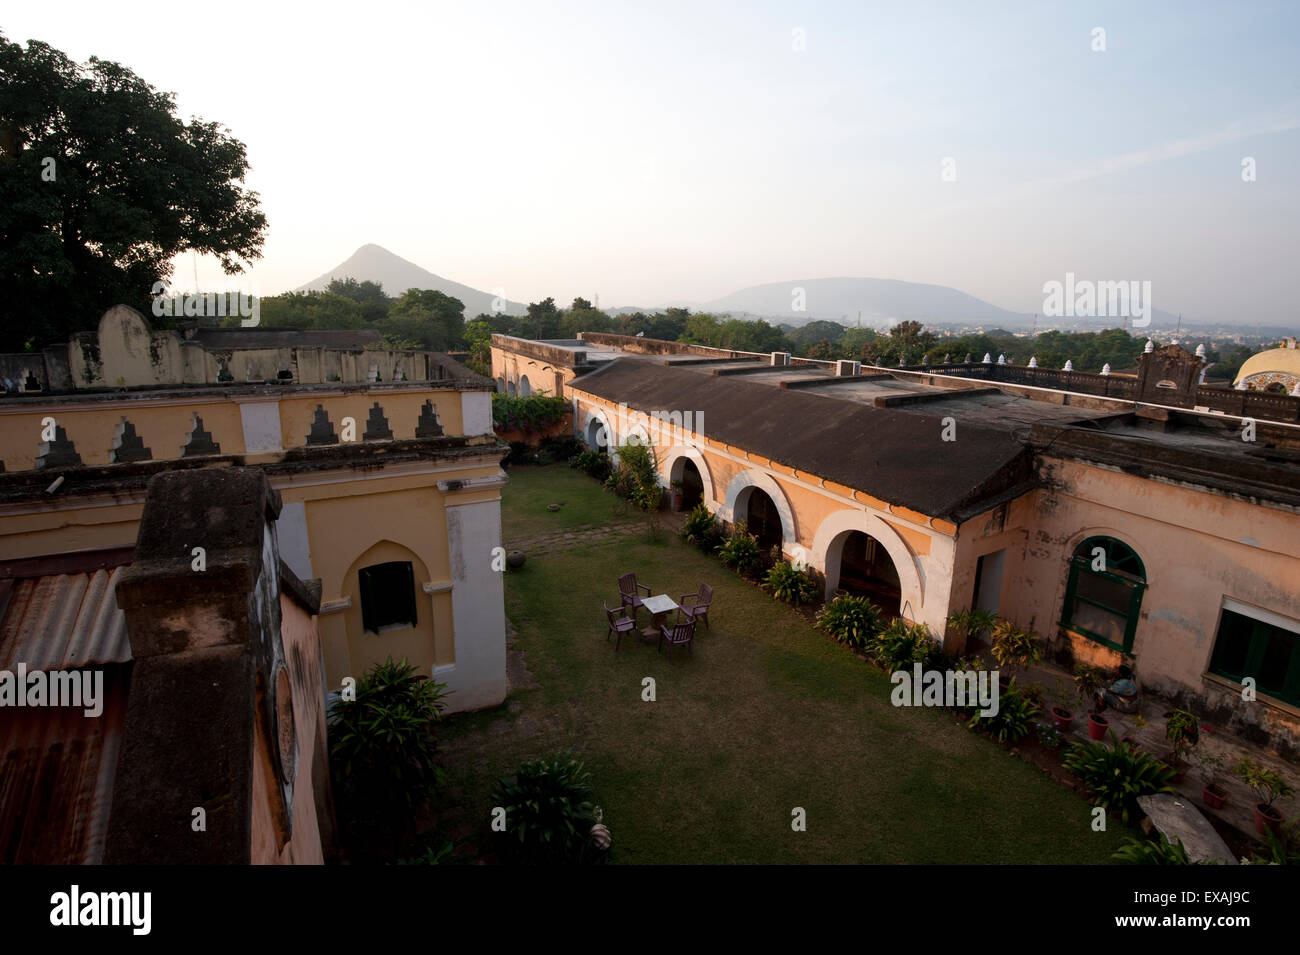 Early morning on the lawns of old rural Rajput palace, Dhenkanal, Orissa (Odisha), India, Asia Stock Photo